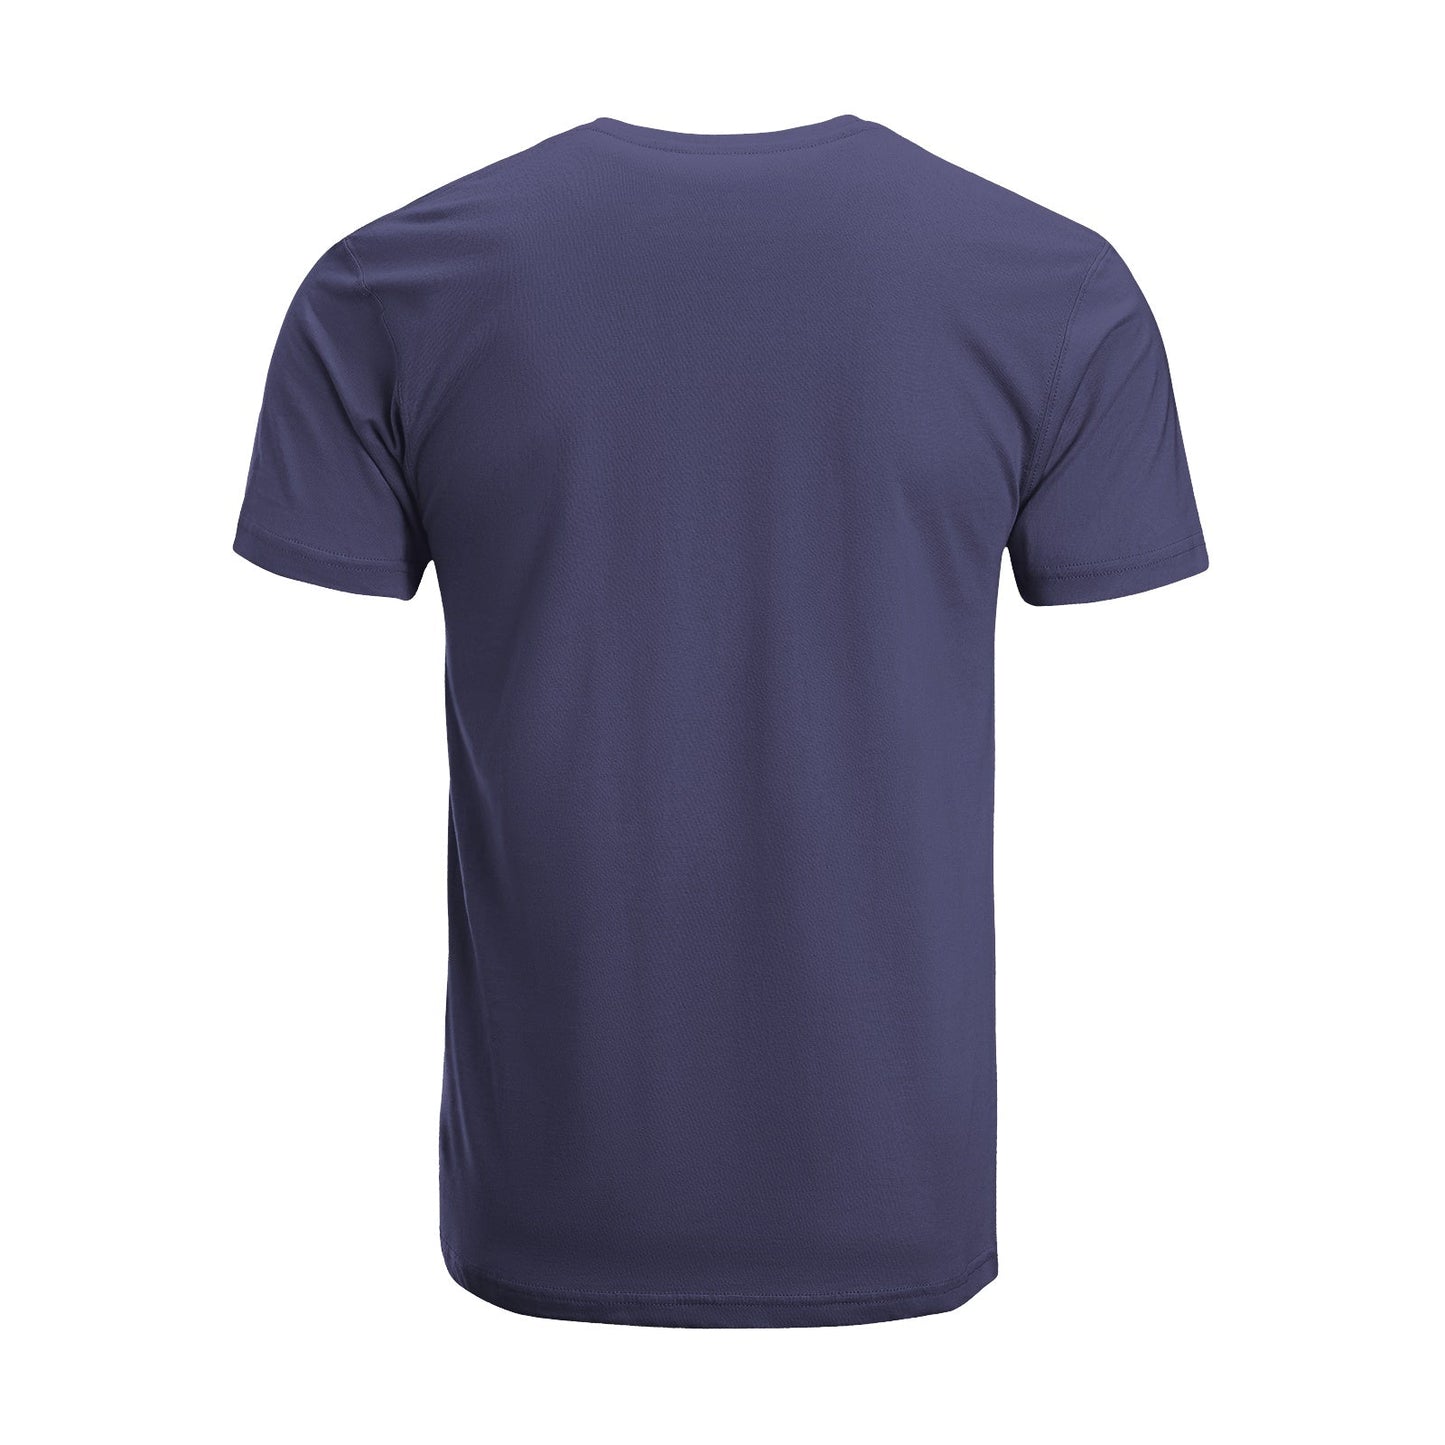 Unisex Short Sleeve Crew Neck Cotton Jersey T-Shirt DOG 45